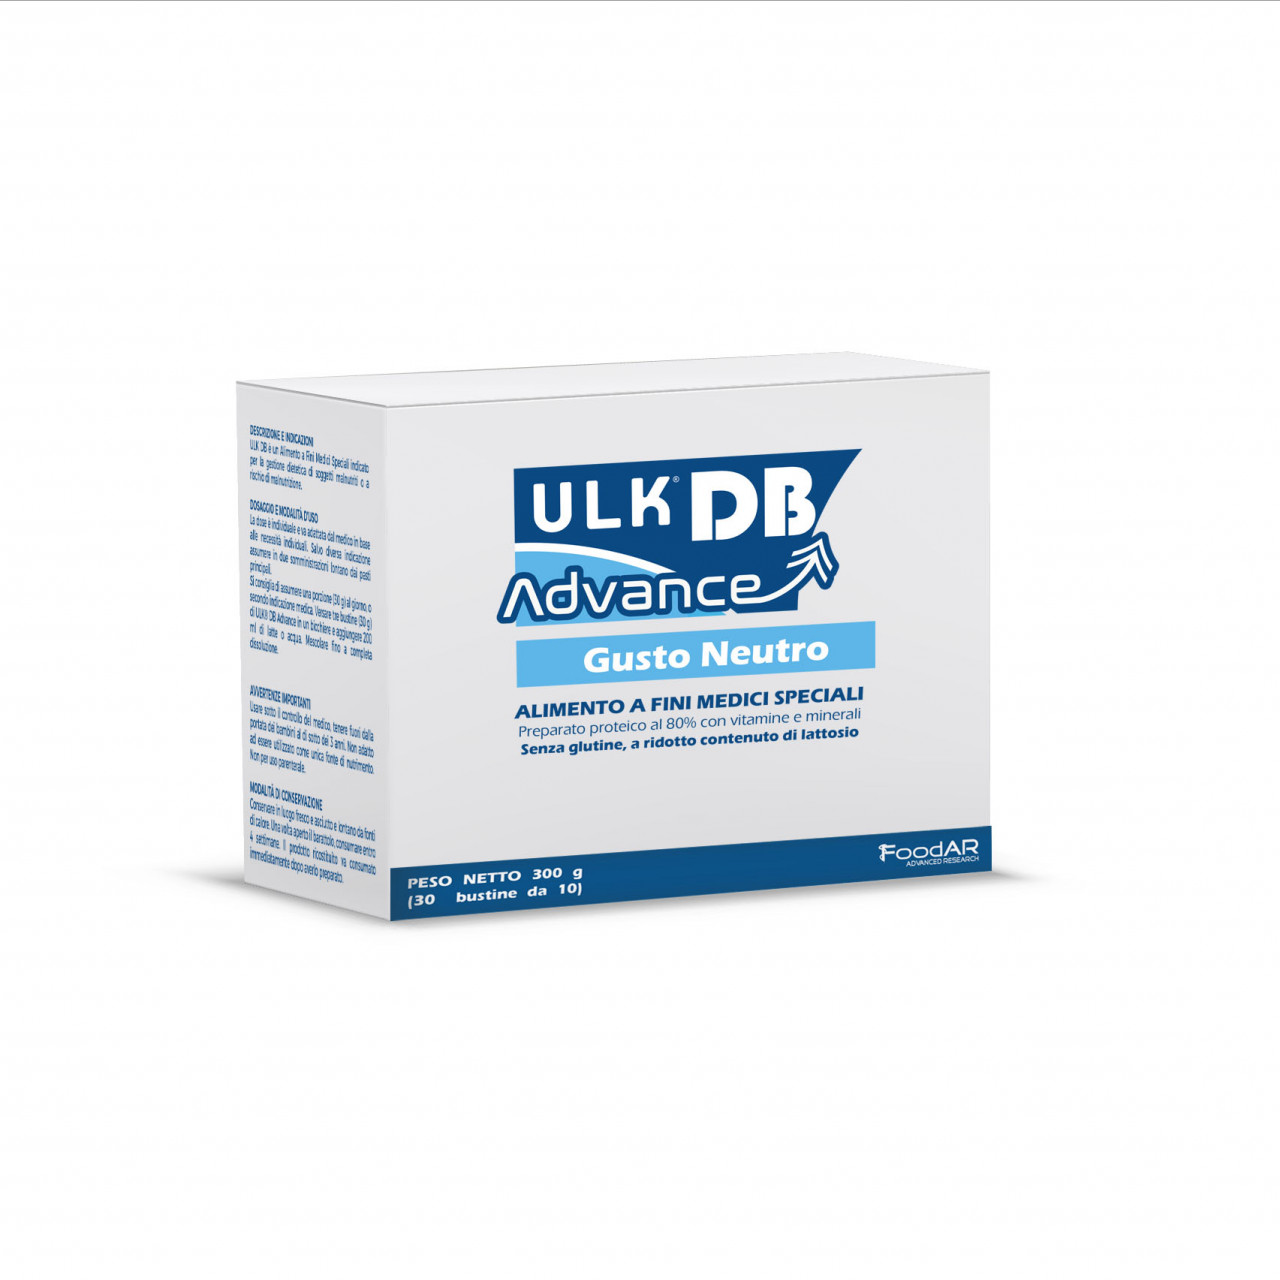 ULK DB Advance 30bs x 10g neutro